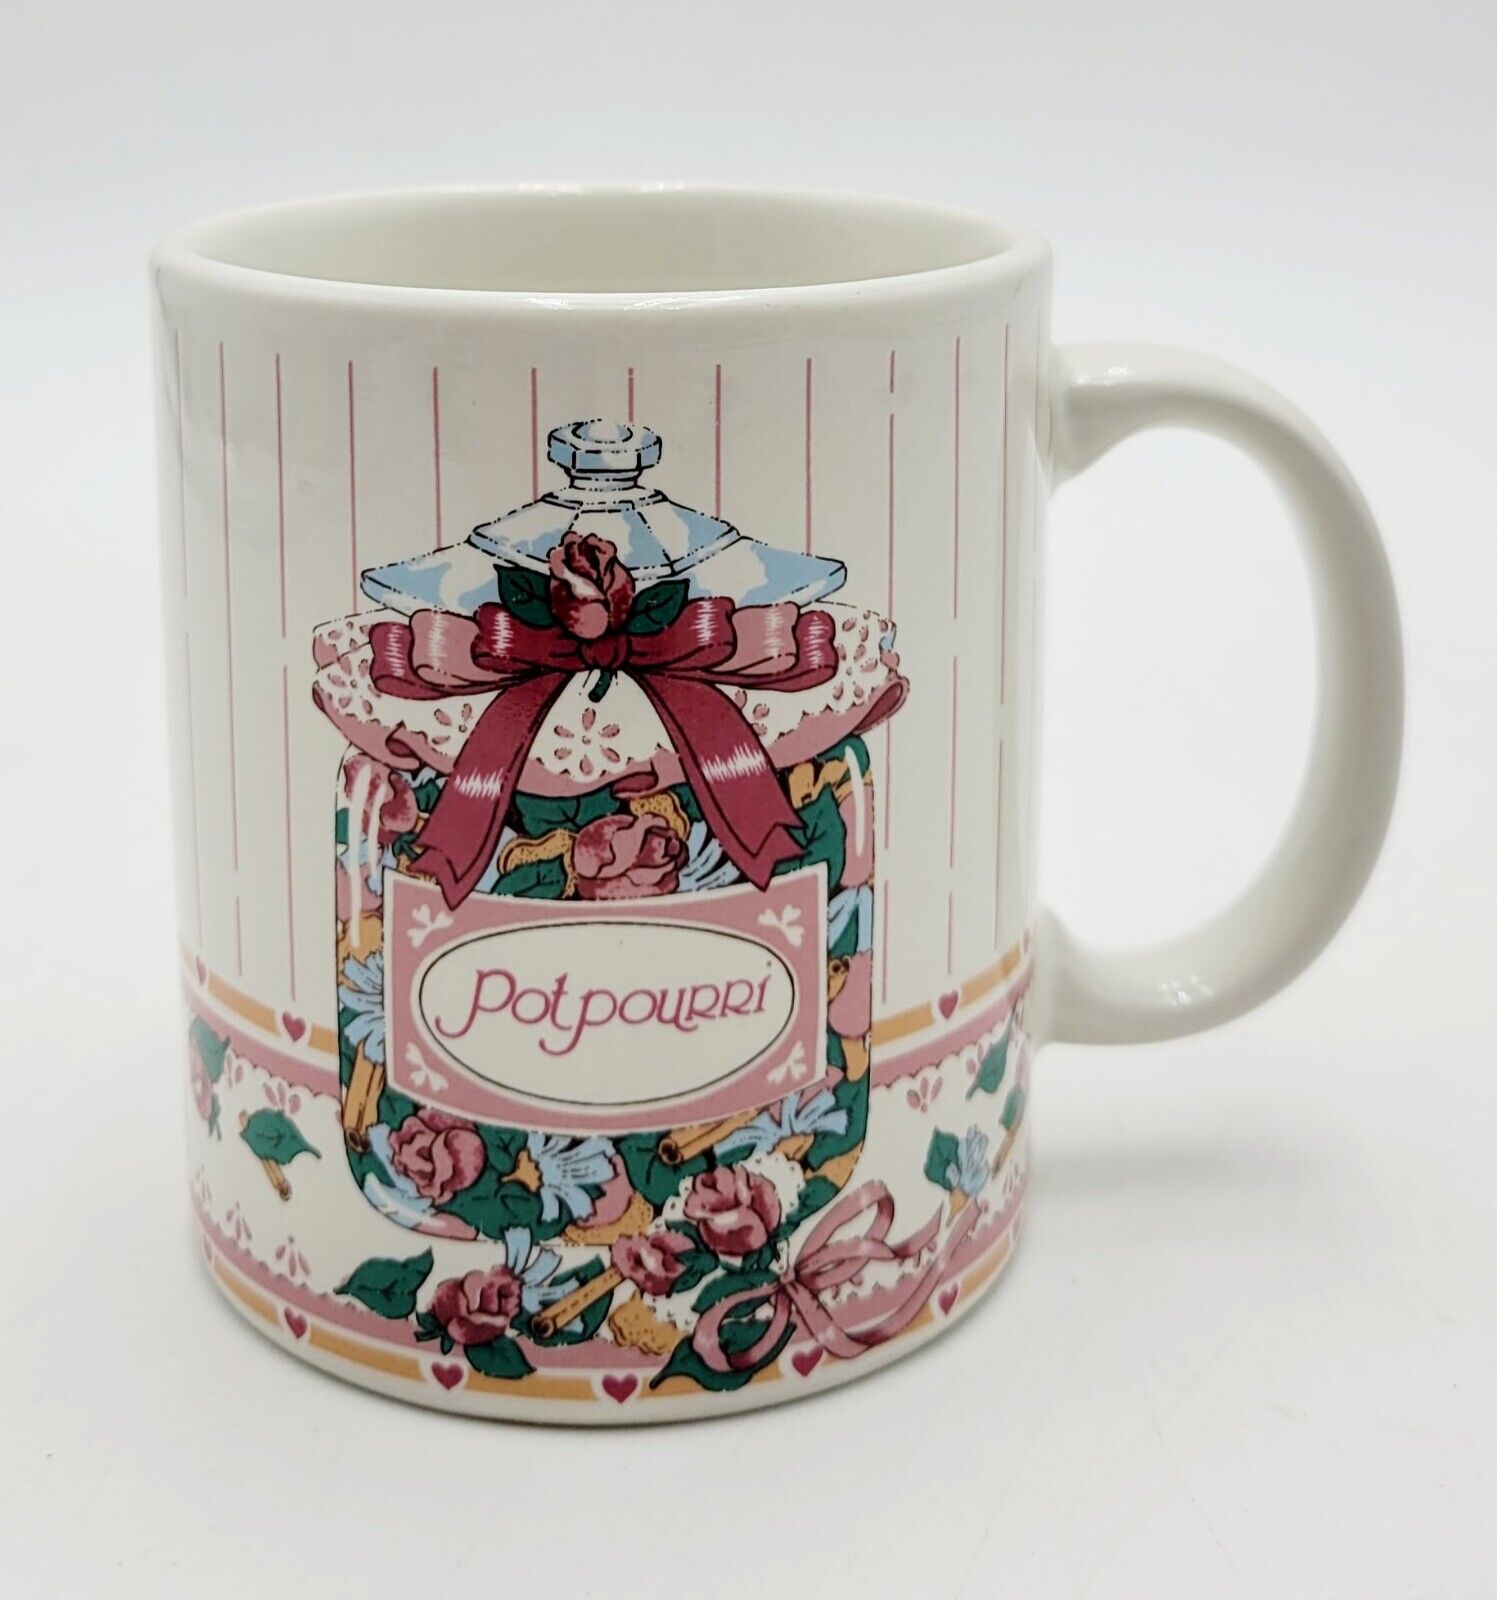 Potpourri Mug 1989 Floral Mug Cup Japan 